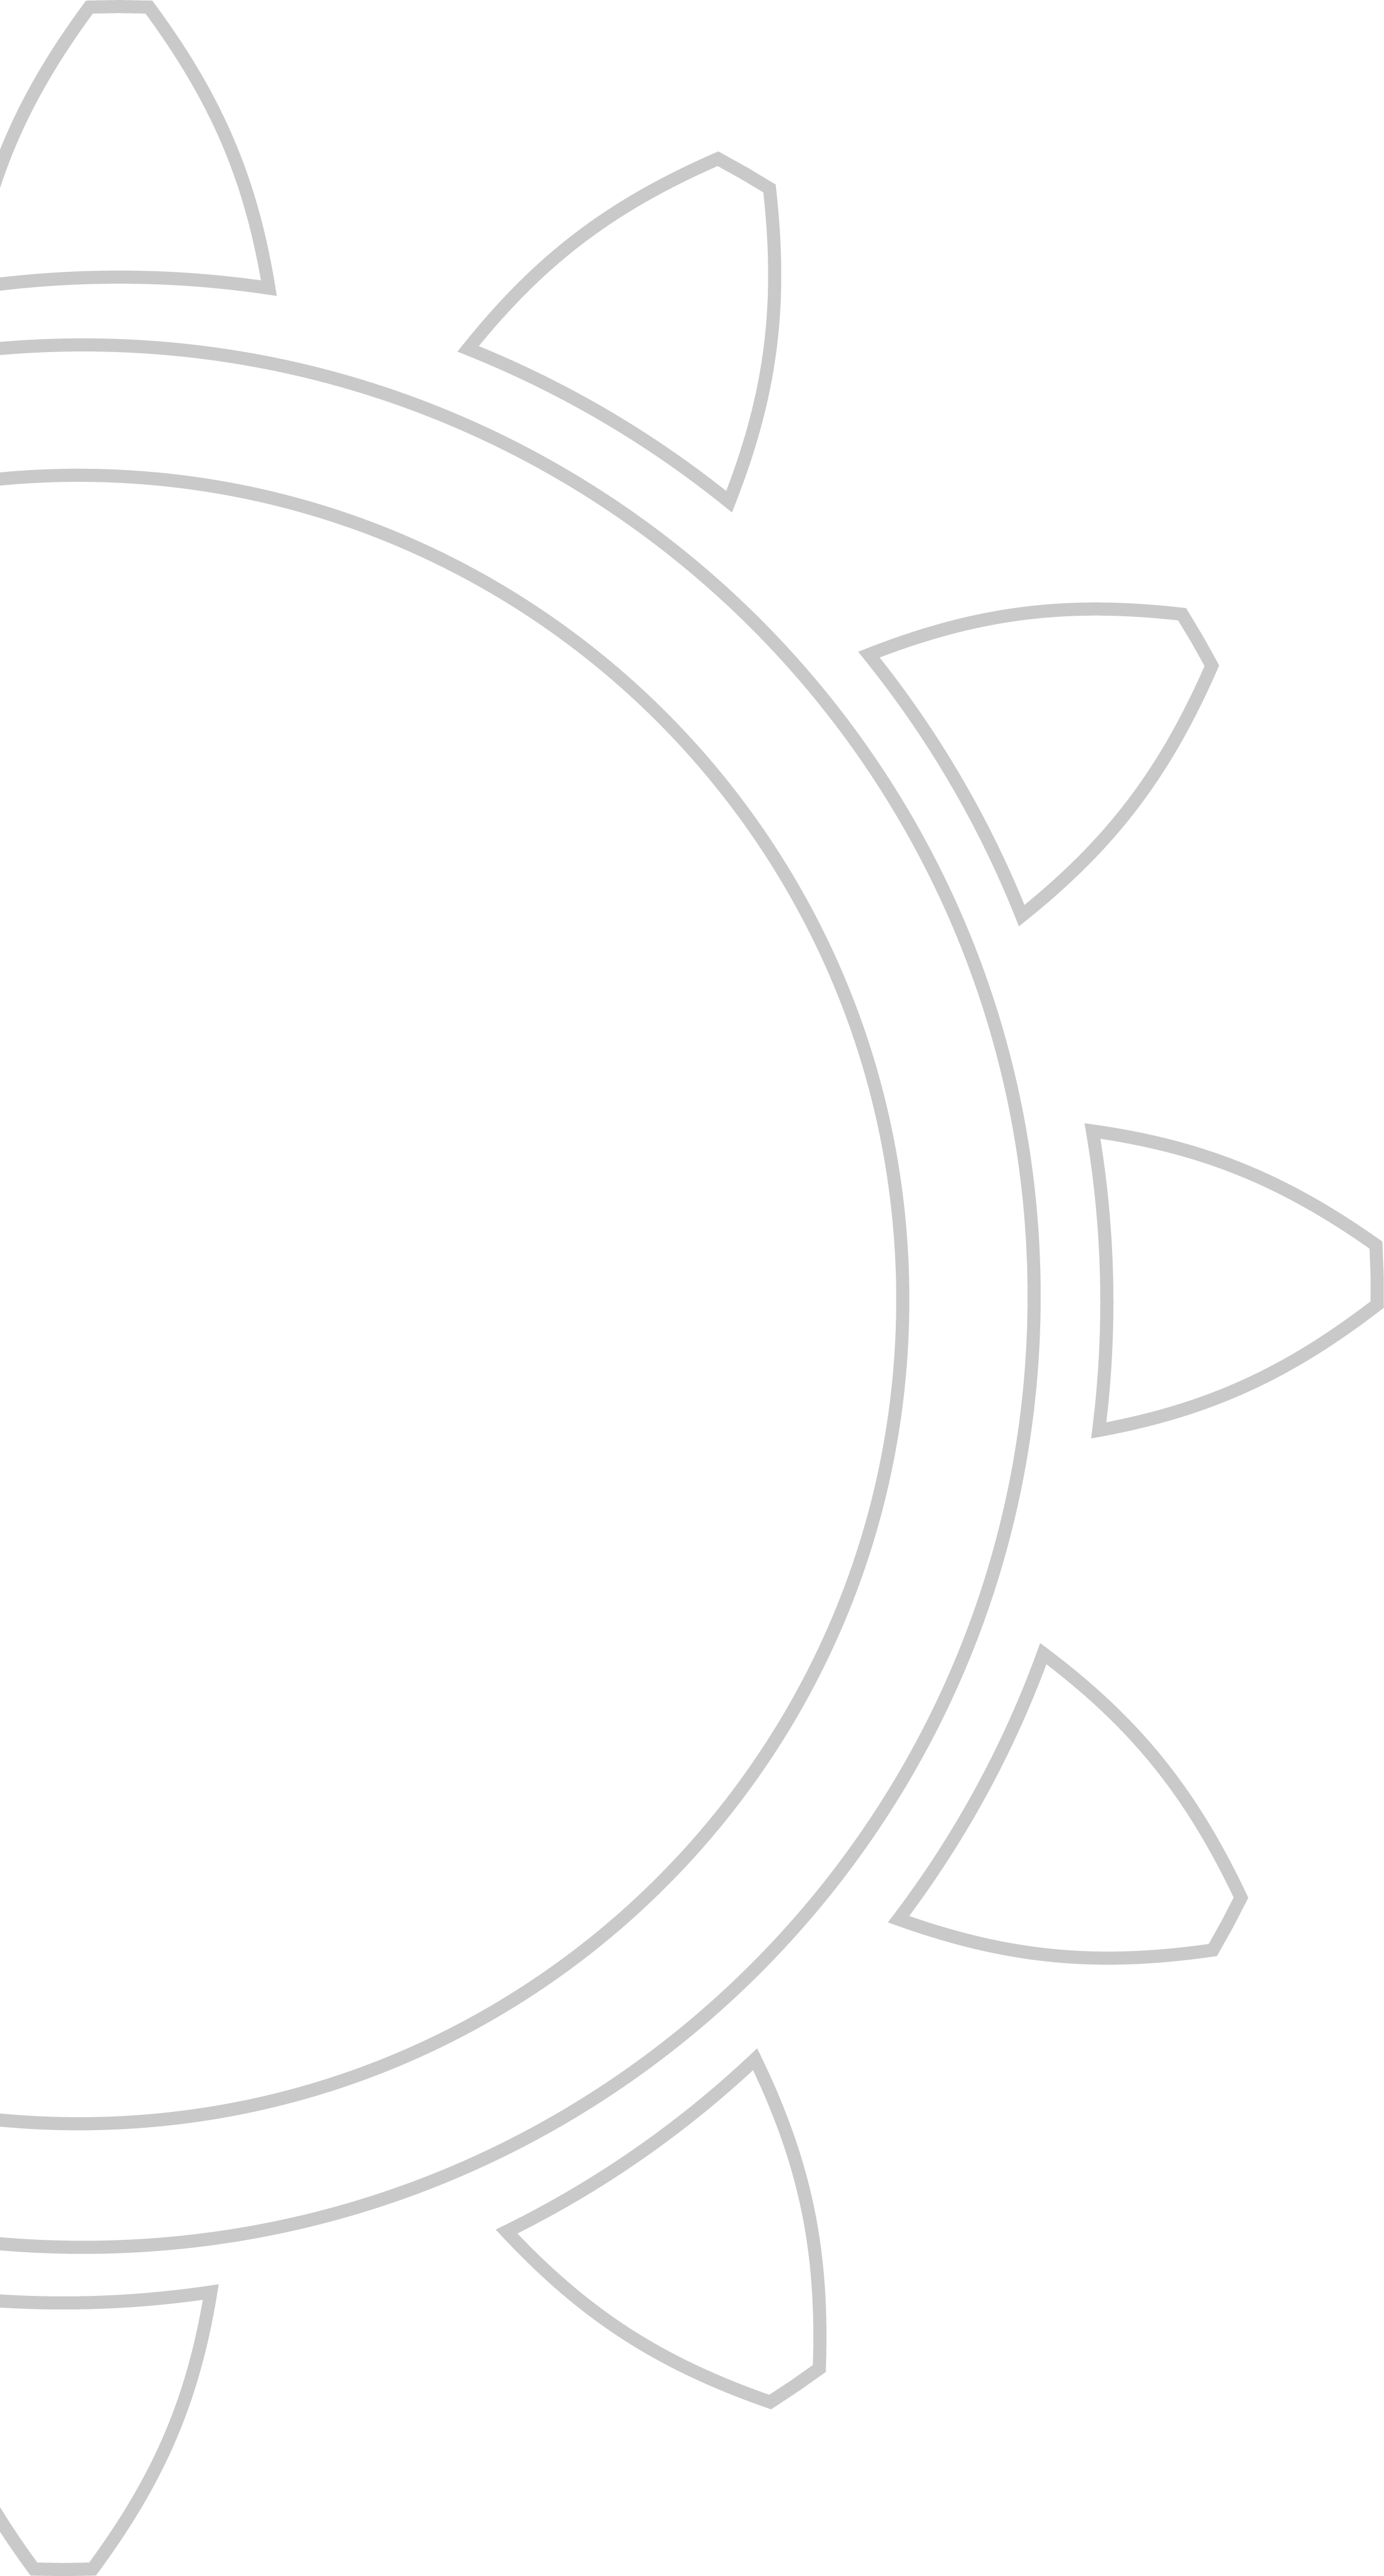 PRINTessence Werl Zahnradsymbol Logo Bildmarke